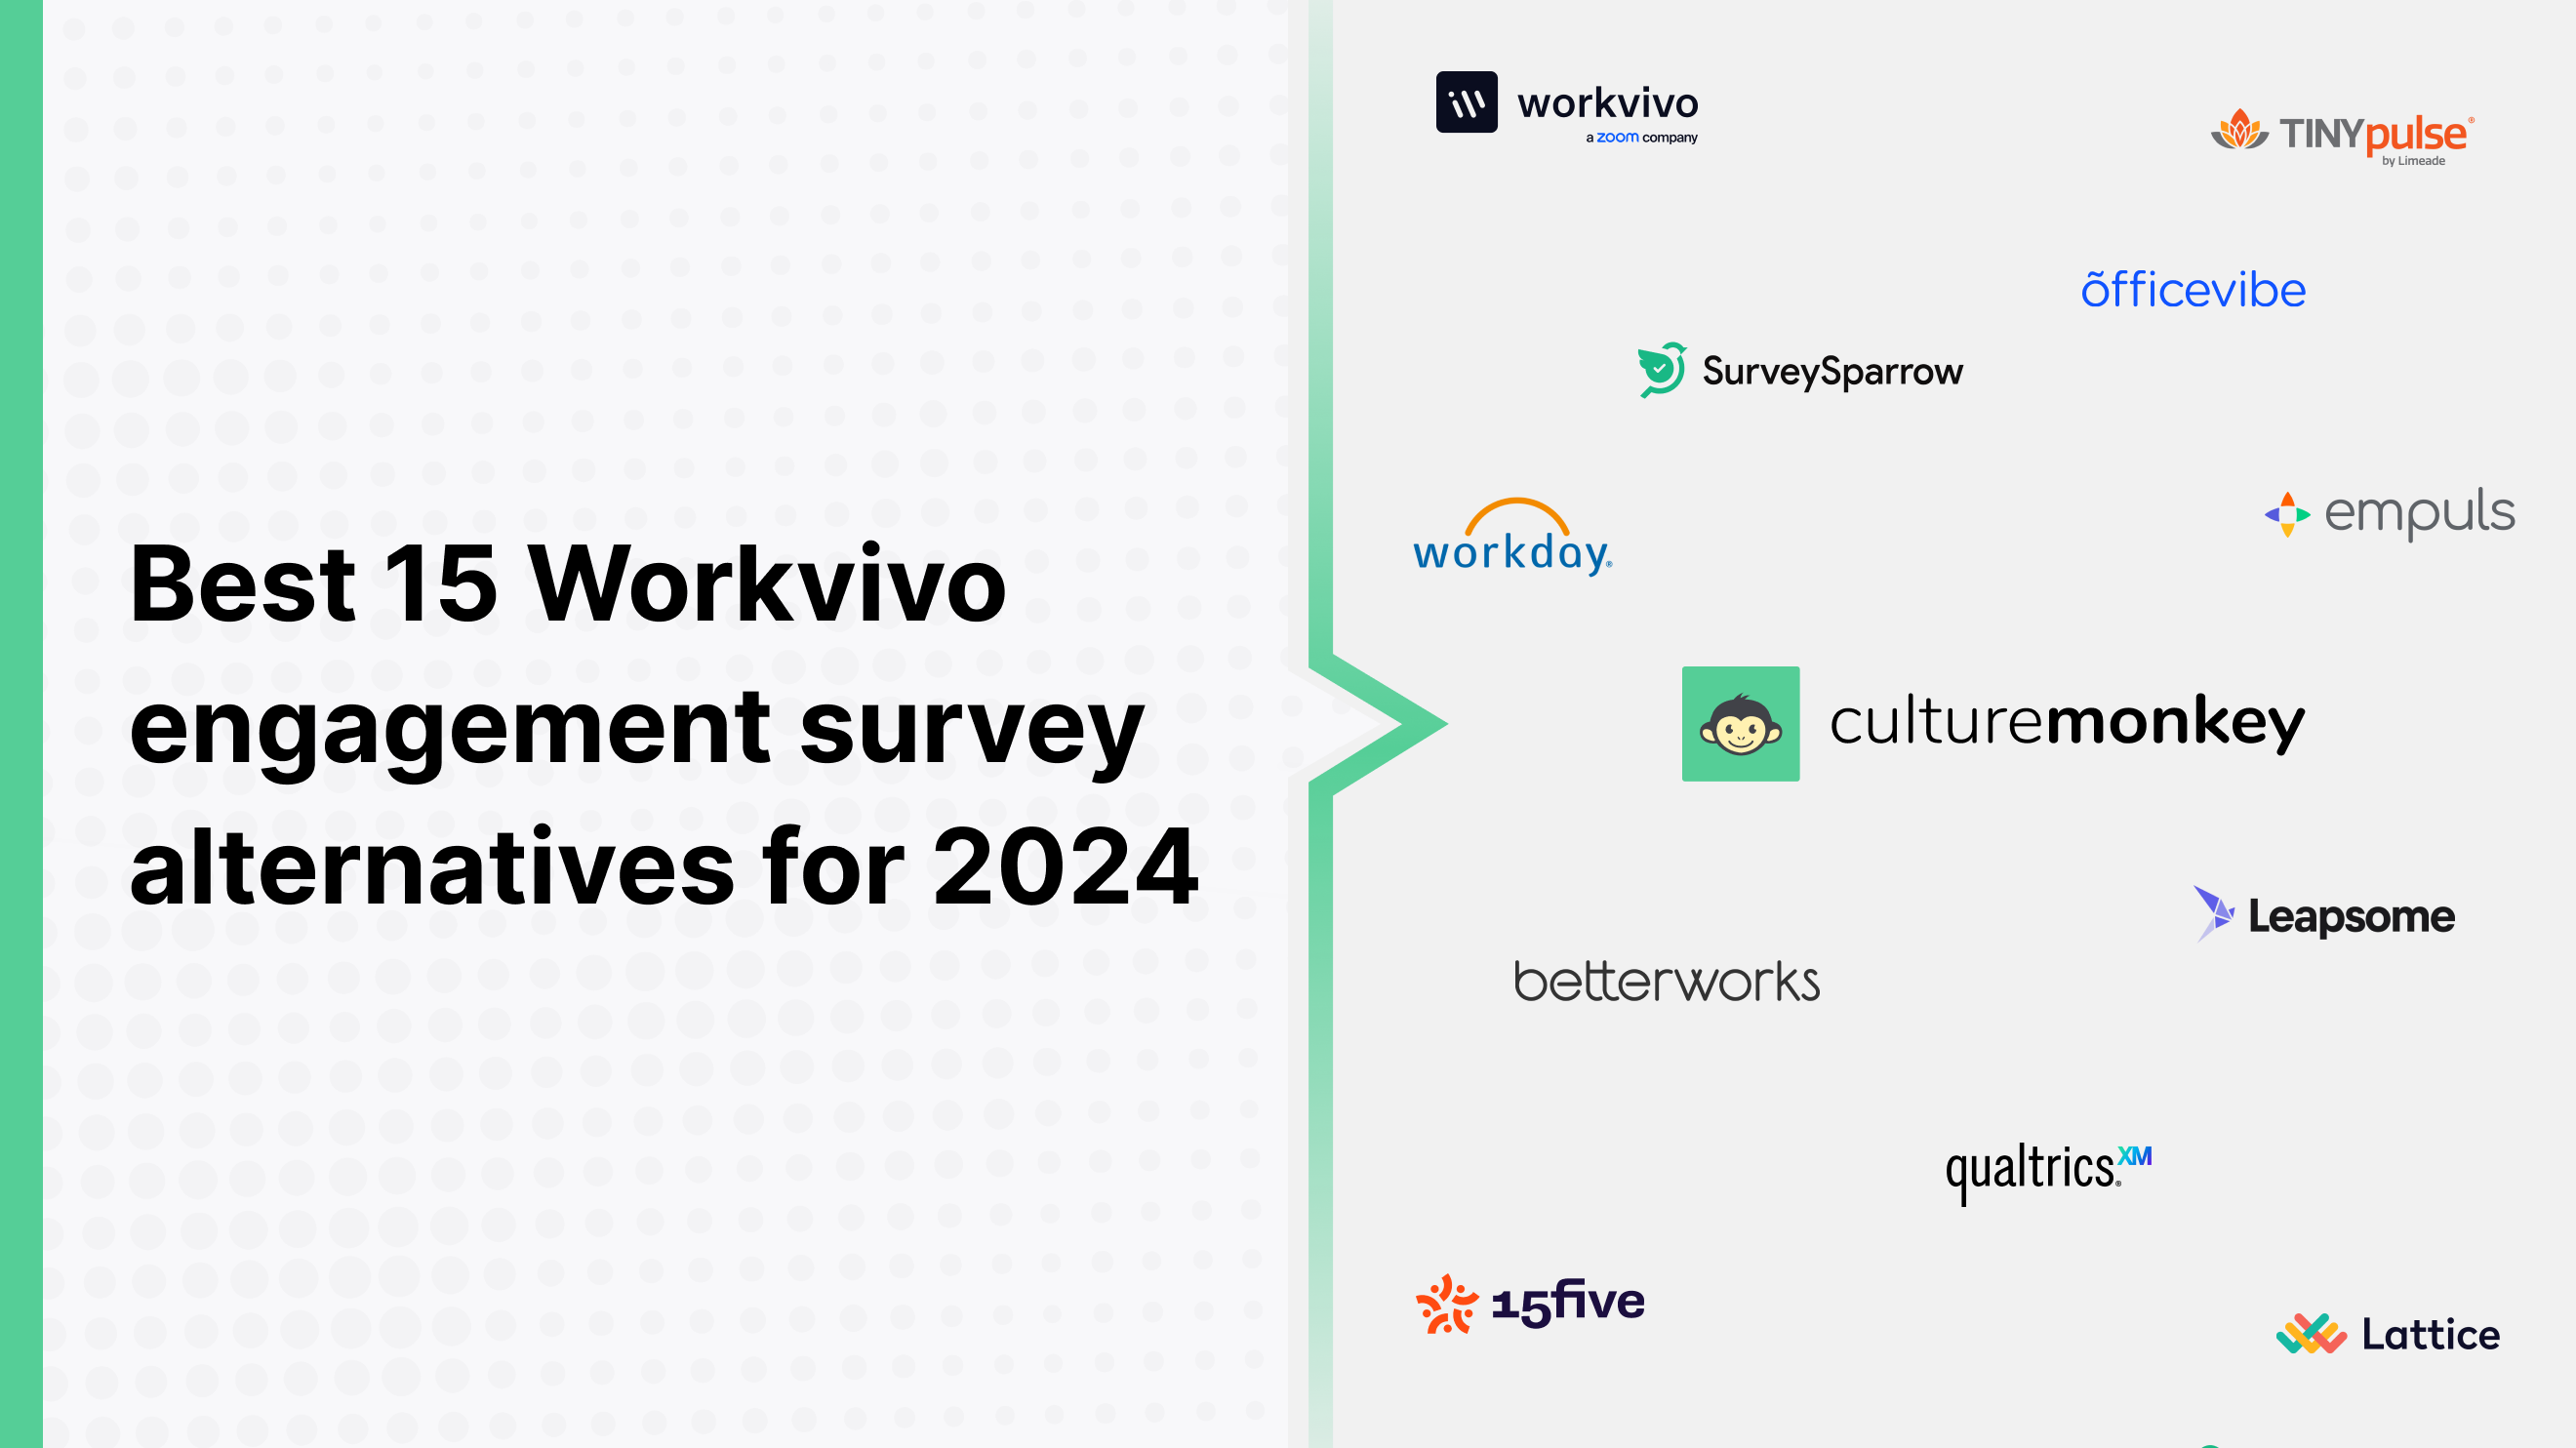 Best 15 Workvivo engagement survey alternatives for 2024